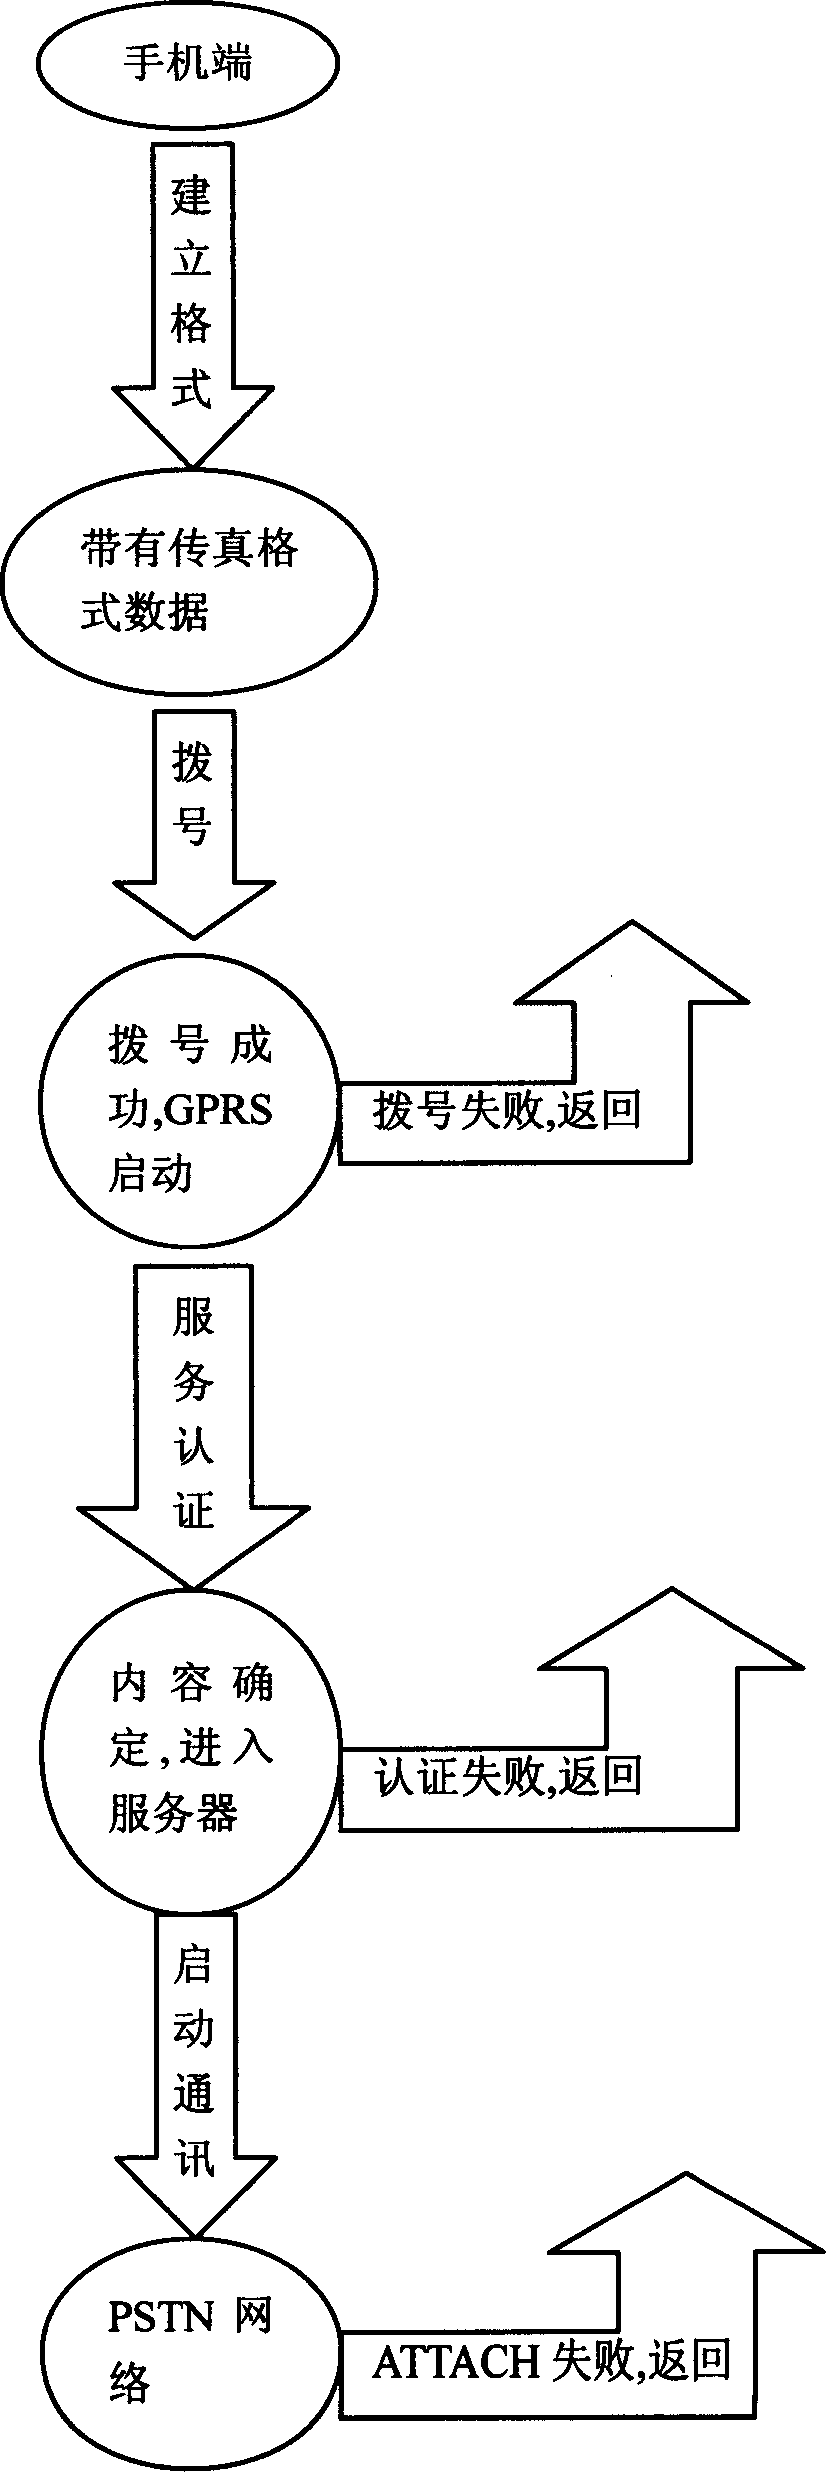 Method for transmitting fax using mobile phone